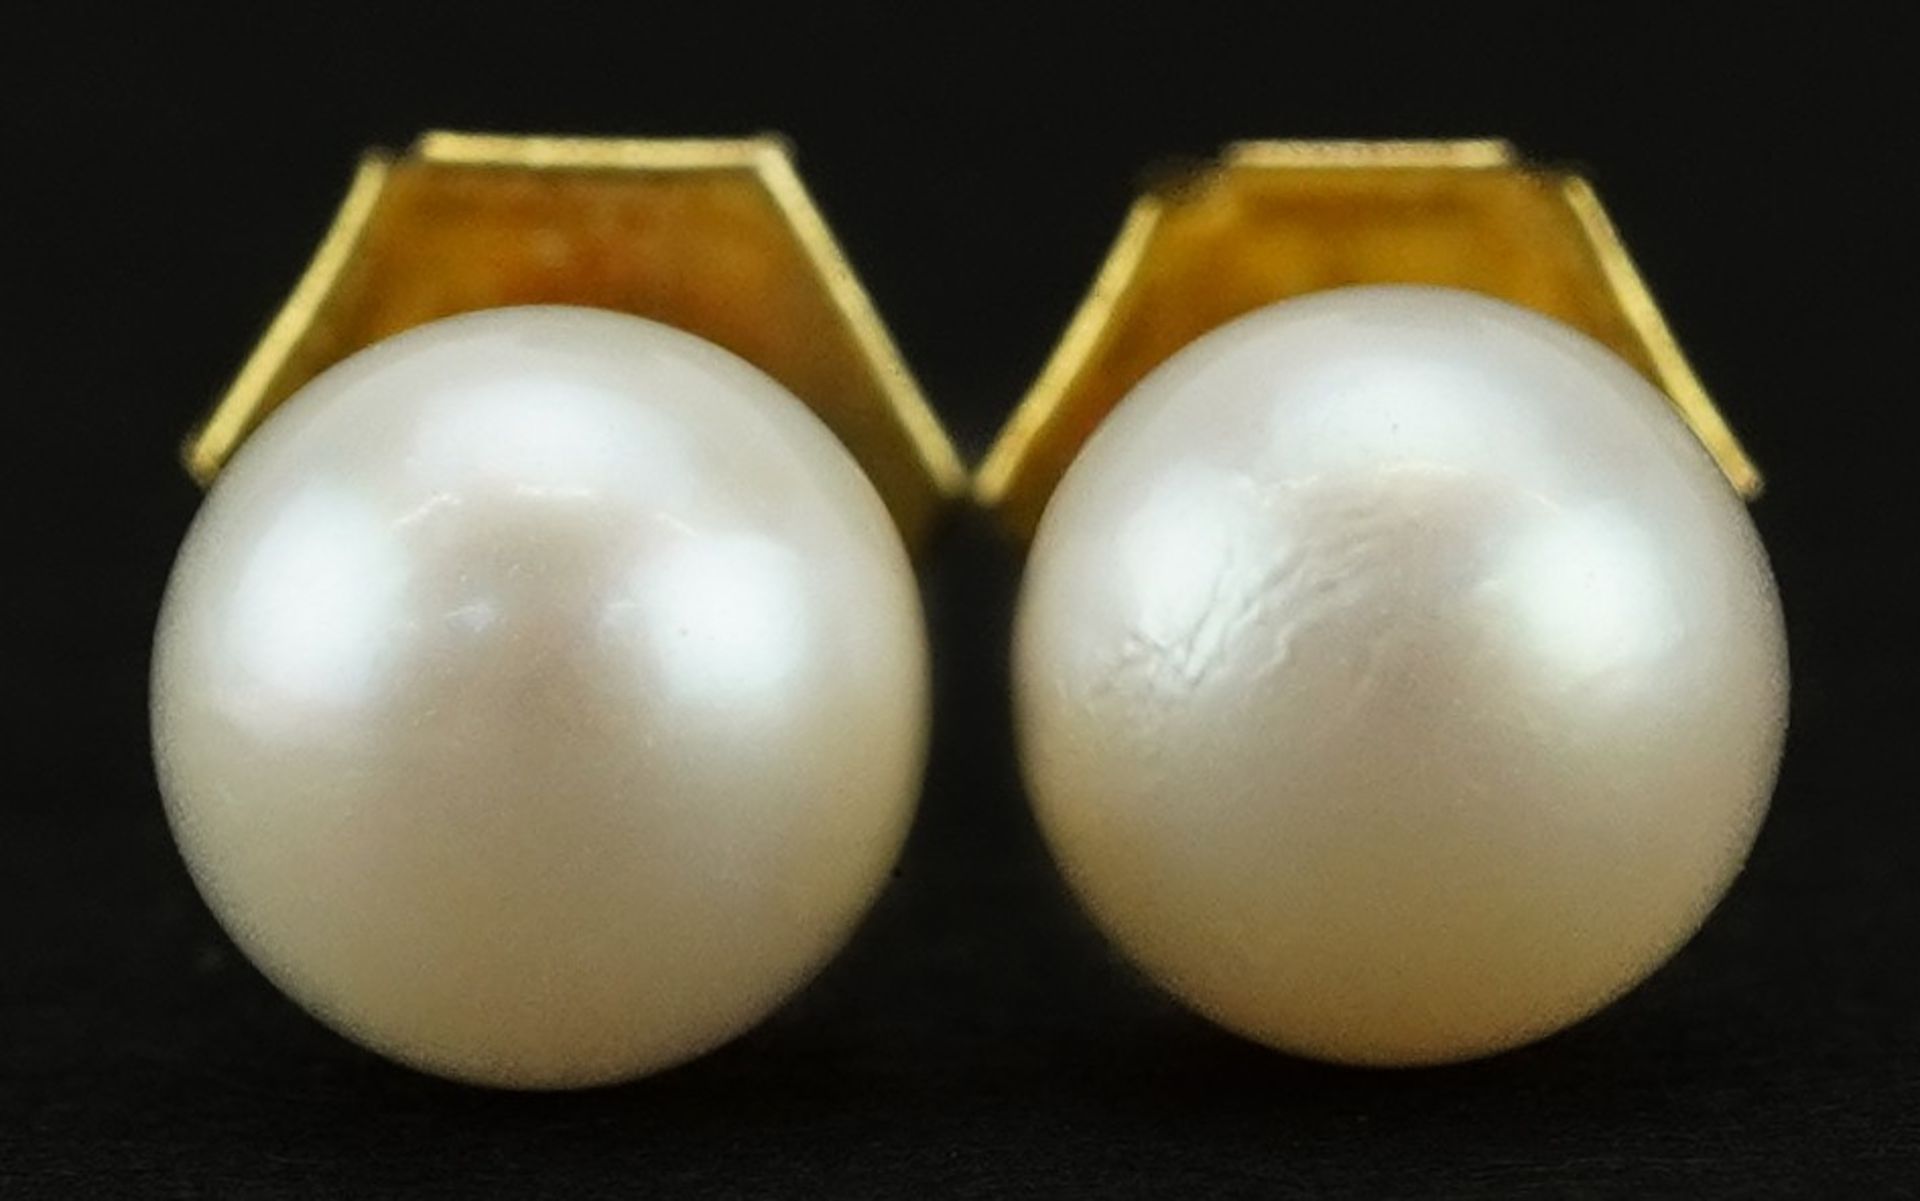 Pair of 9ct gold cultured pearl stud earrings, 7mm in diameter, 1.1g